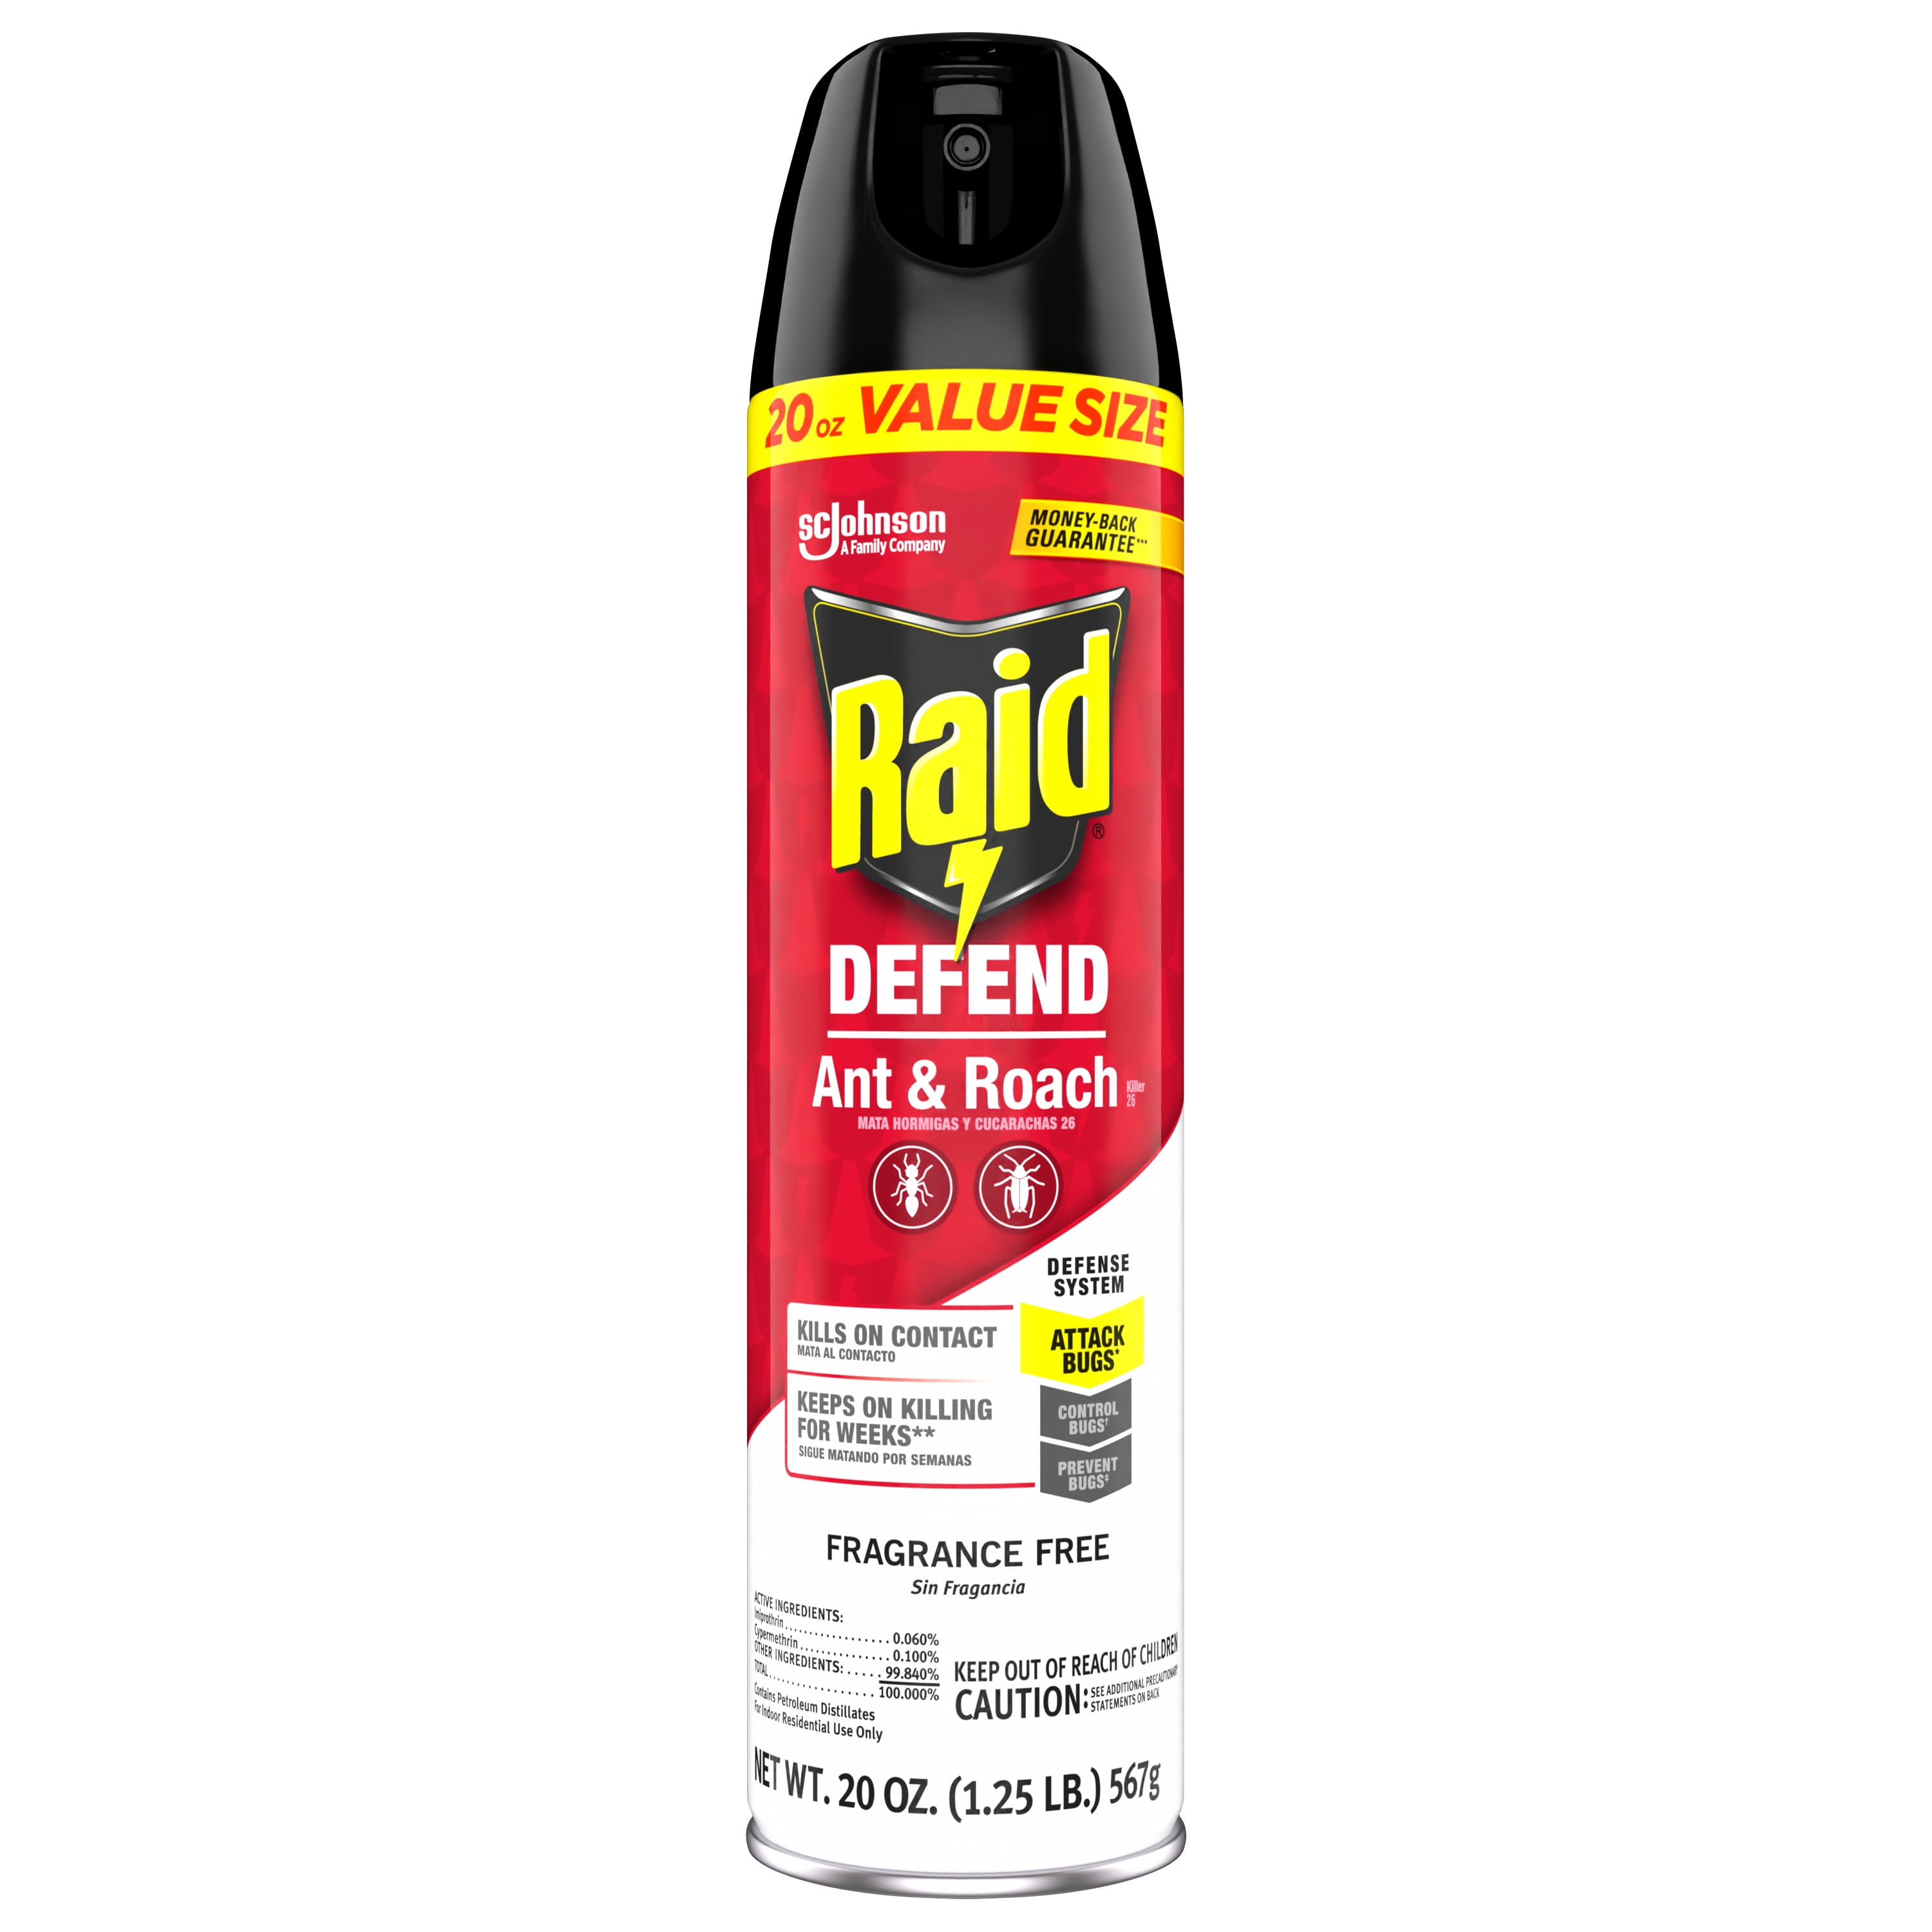 Raid Defend Indoor Ant and Roach Killer Spray Value Size, 20 oz 